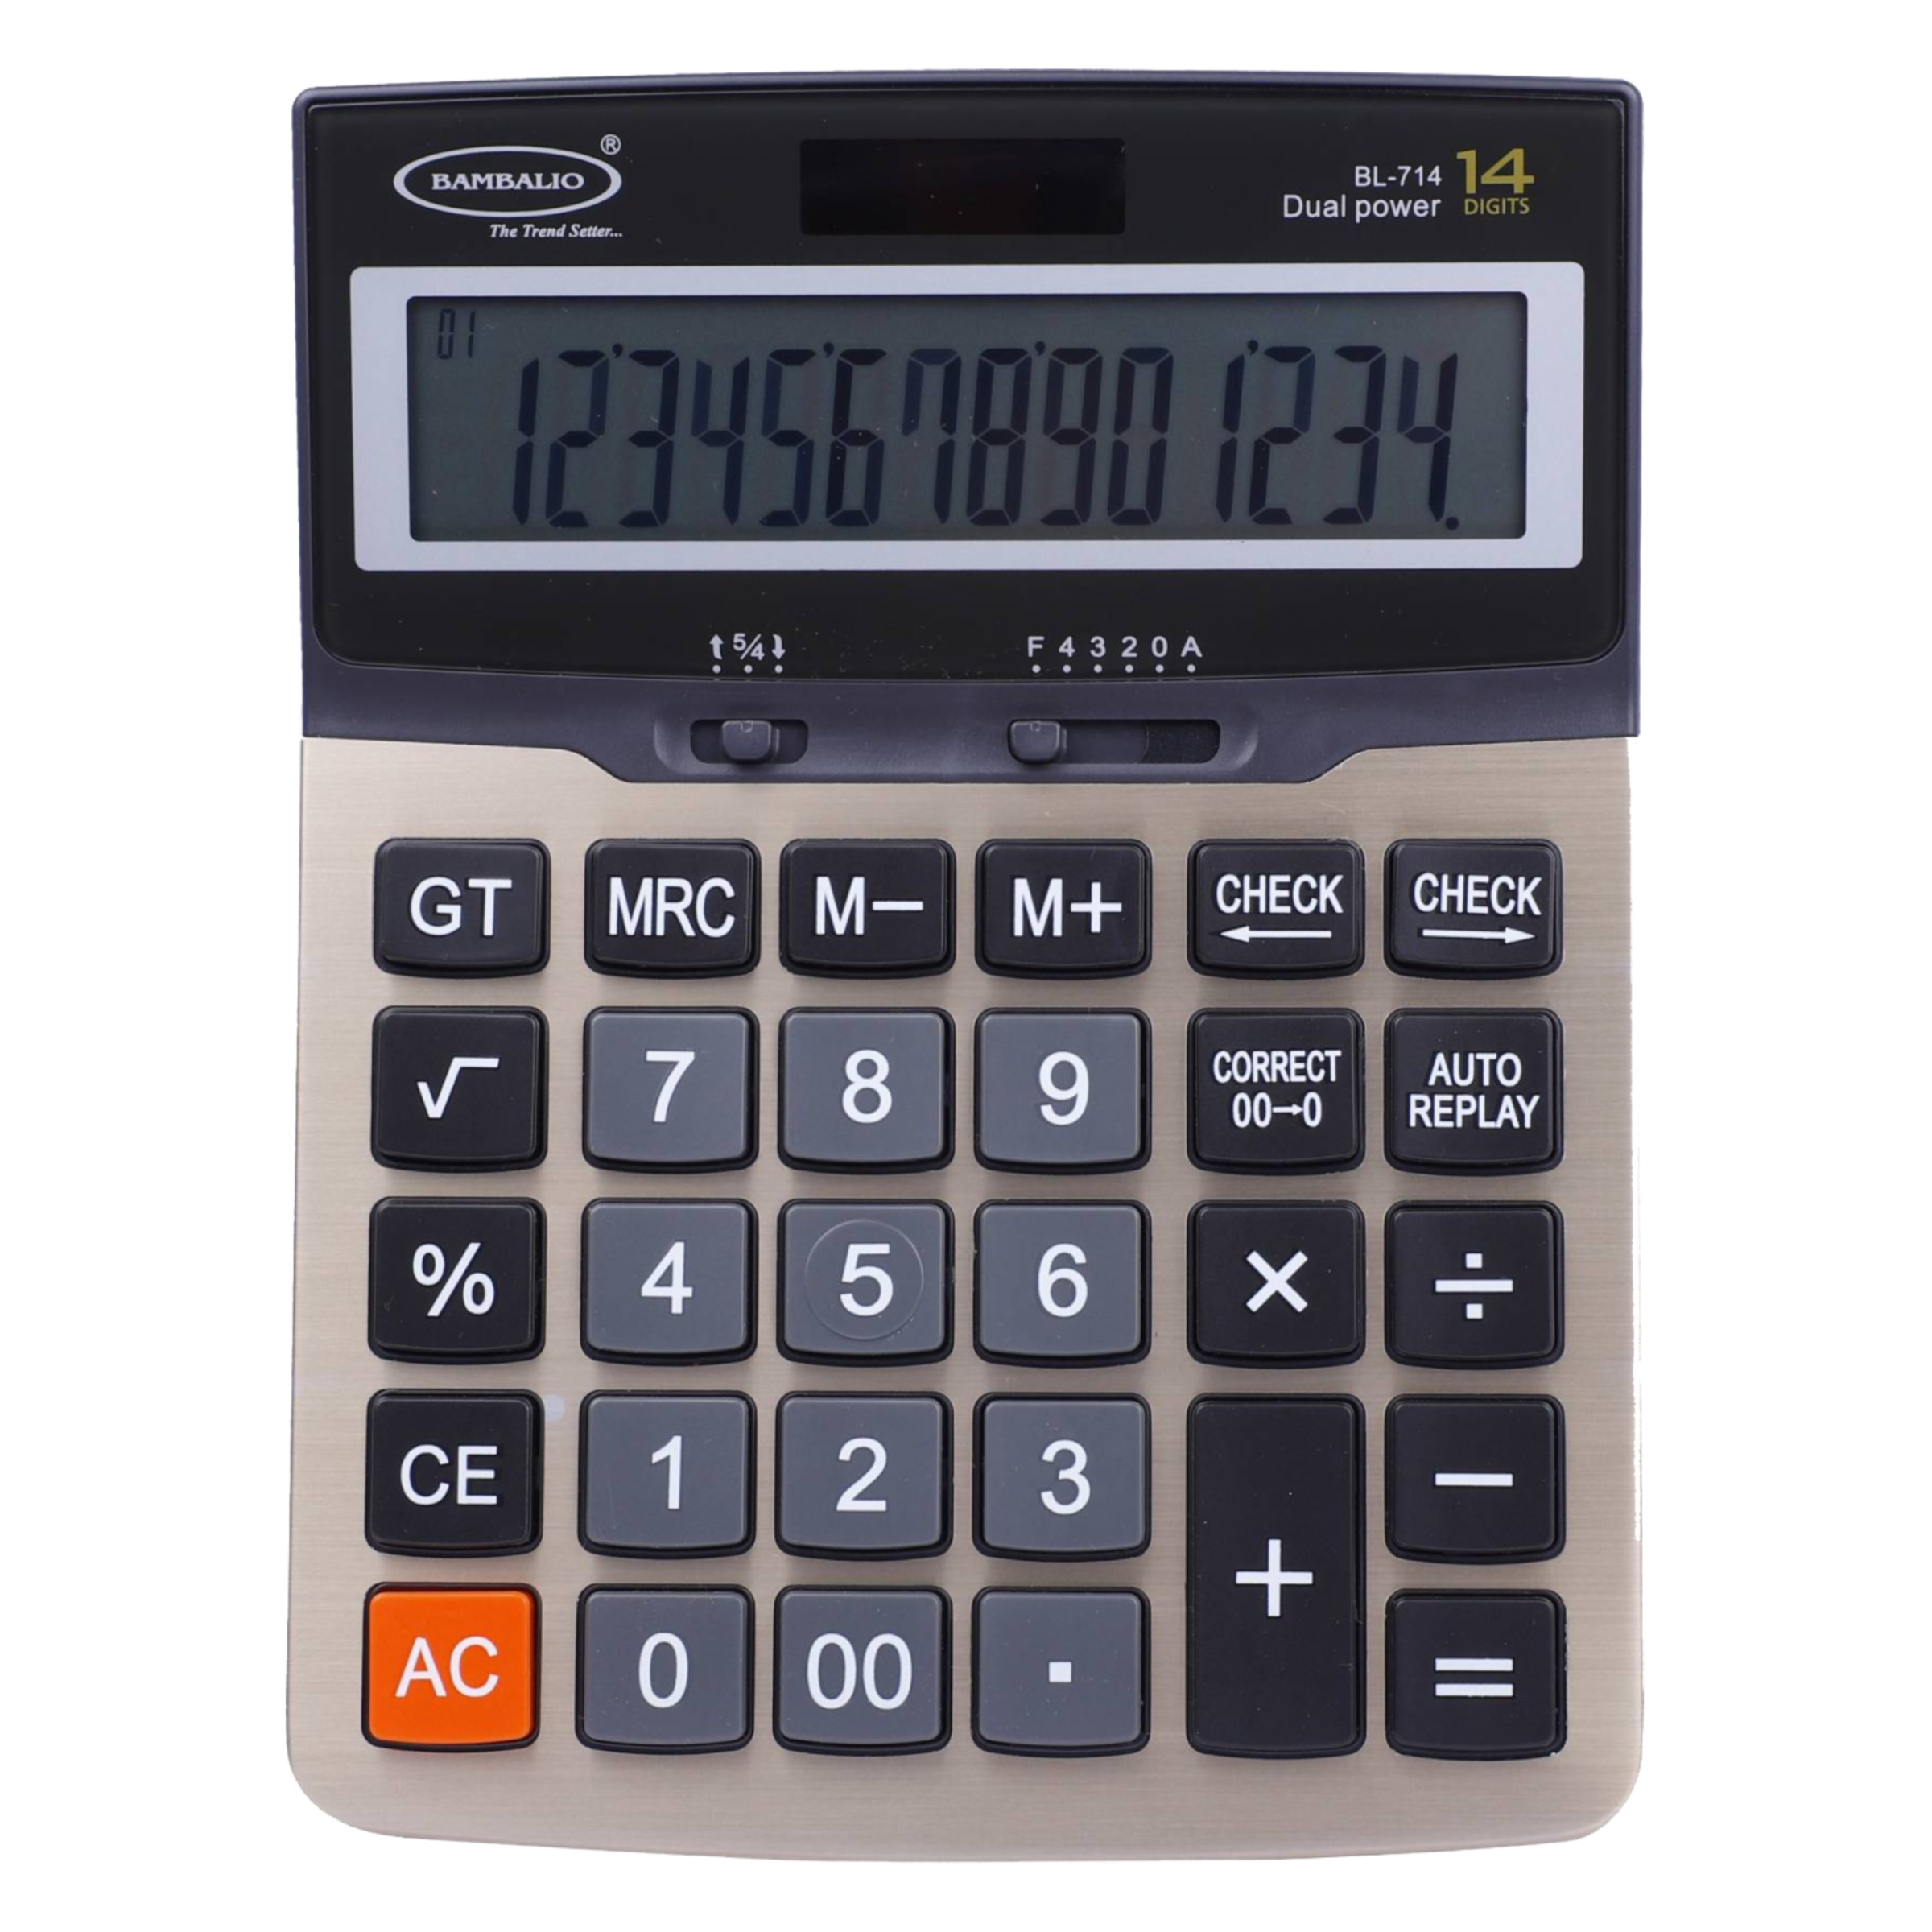 Bambalio Basic Calculator (14 Digits-Large Display, BL-714, Metallic)